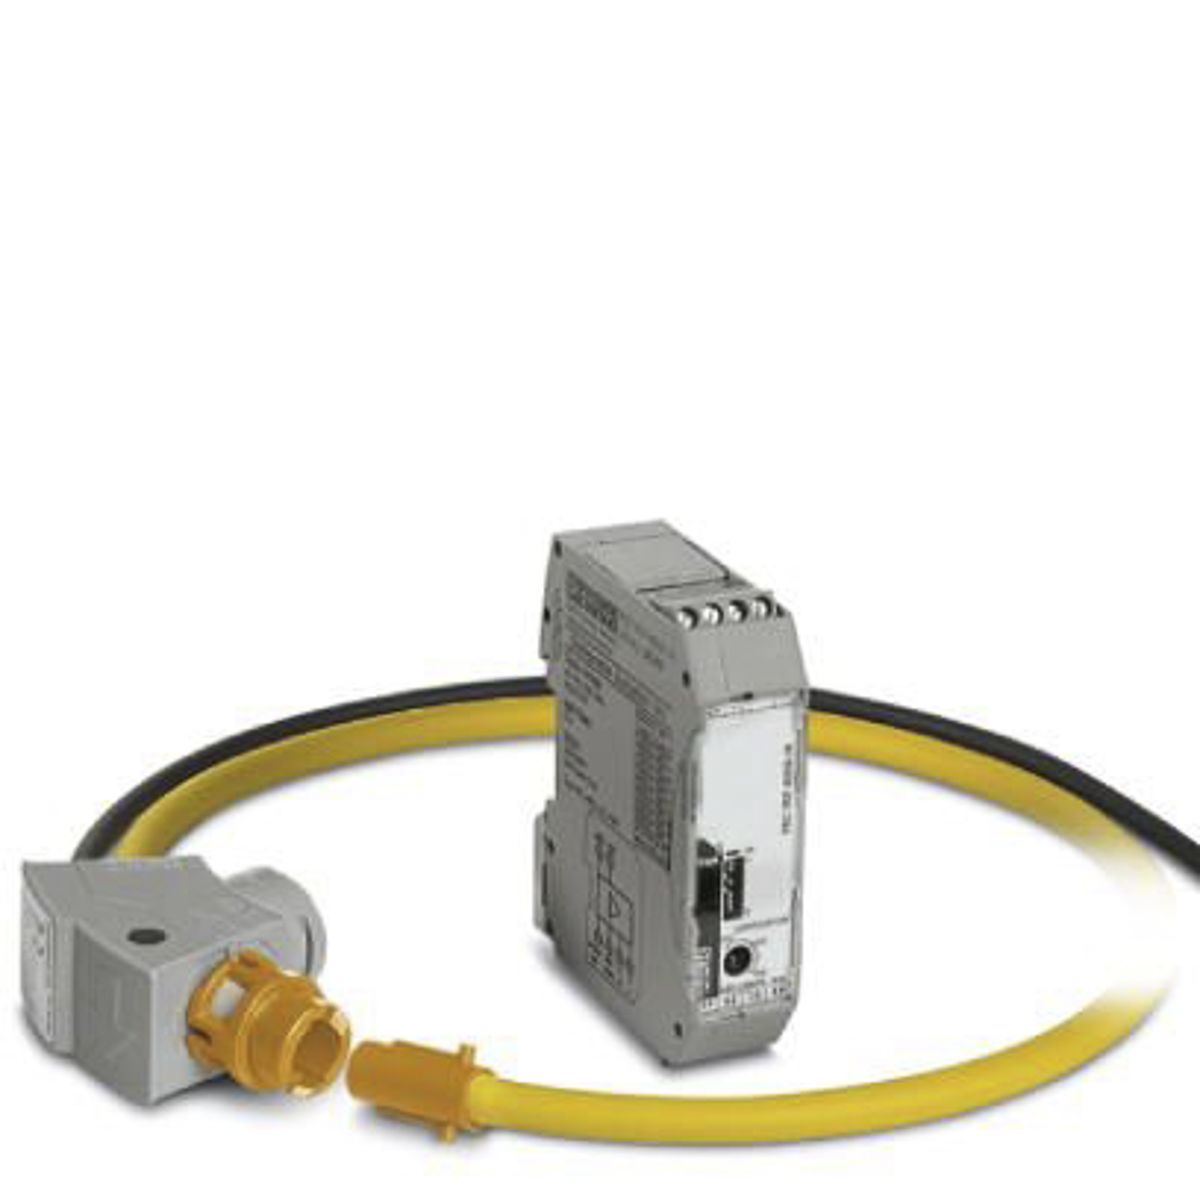 Phoenix Contact PACT RCP-D140 Series Rogowski Coil Current Transformer, 4000A Input, 0 → 1 A Output, 8.3mm Bore,